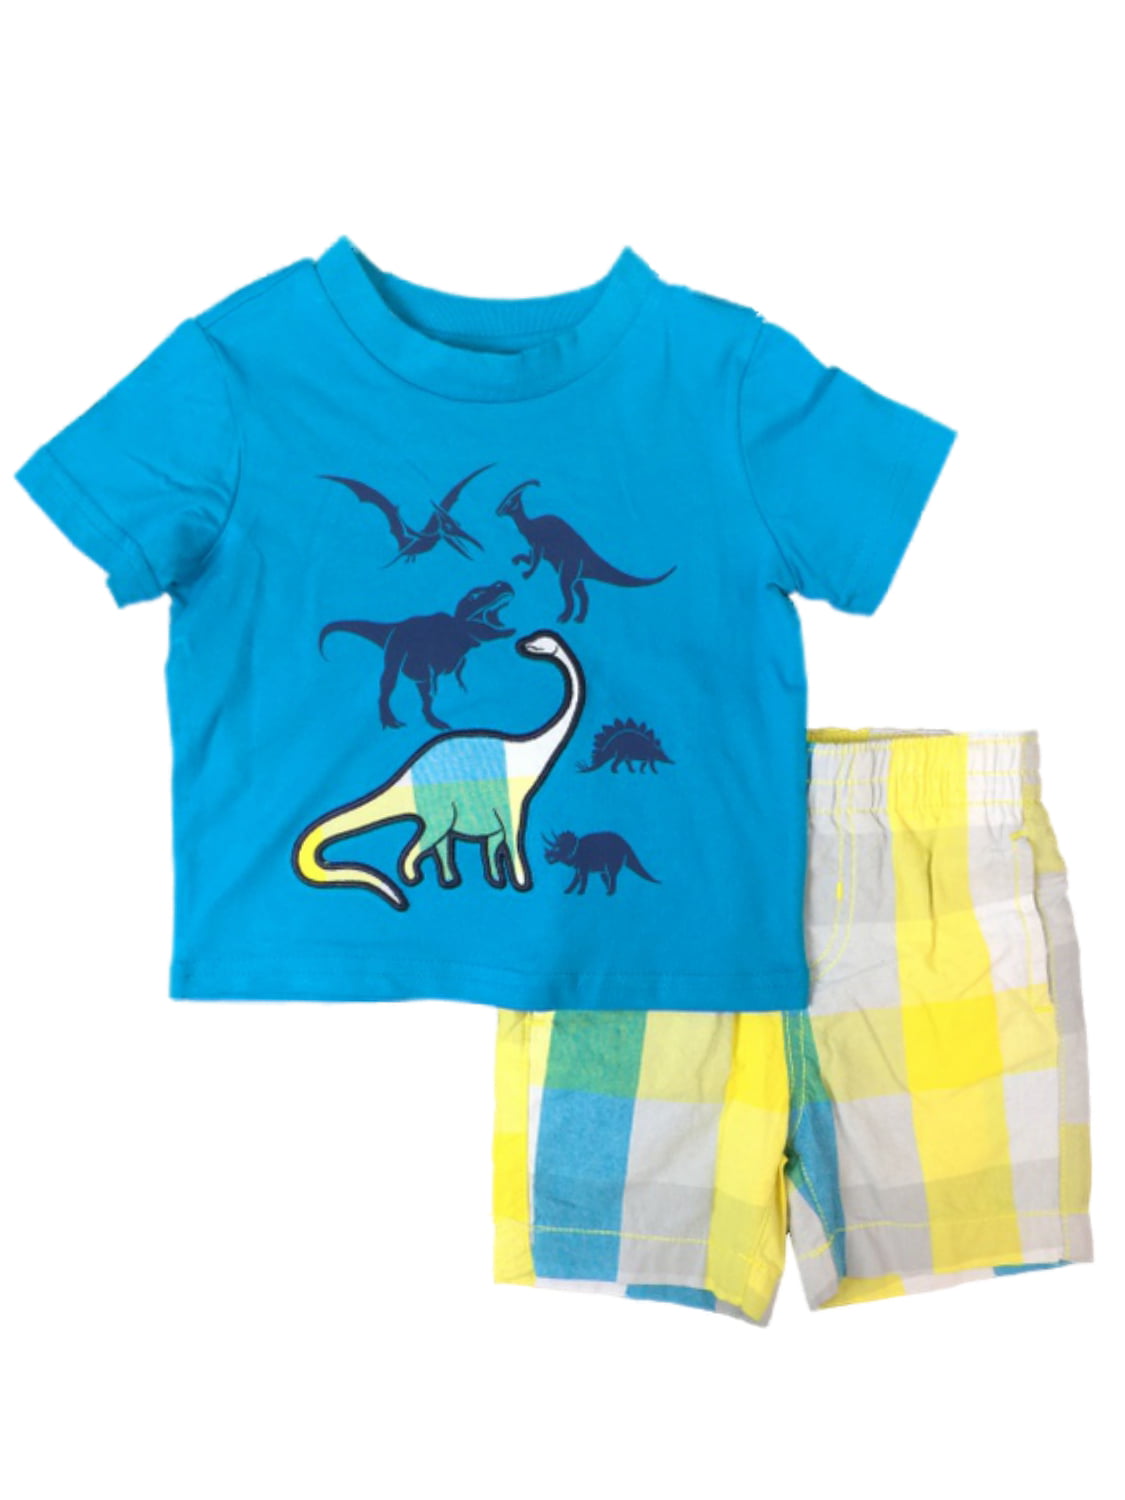 Toughskins - Infant & Toddler Boys Dinosaur Outfit Blue Dino Shirt ...